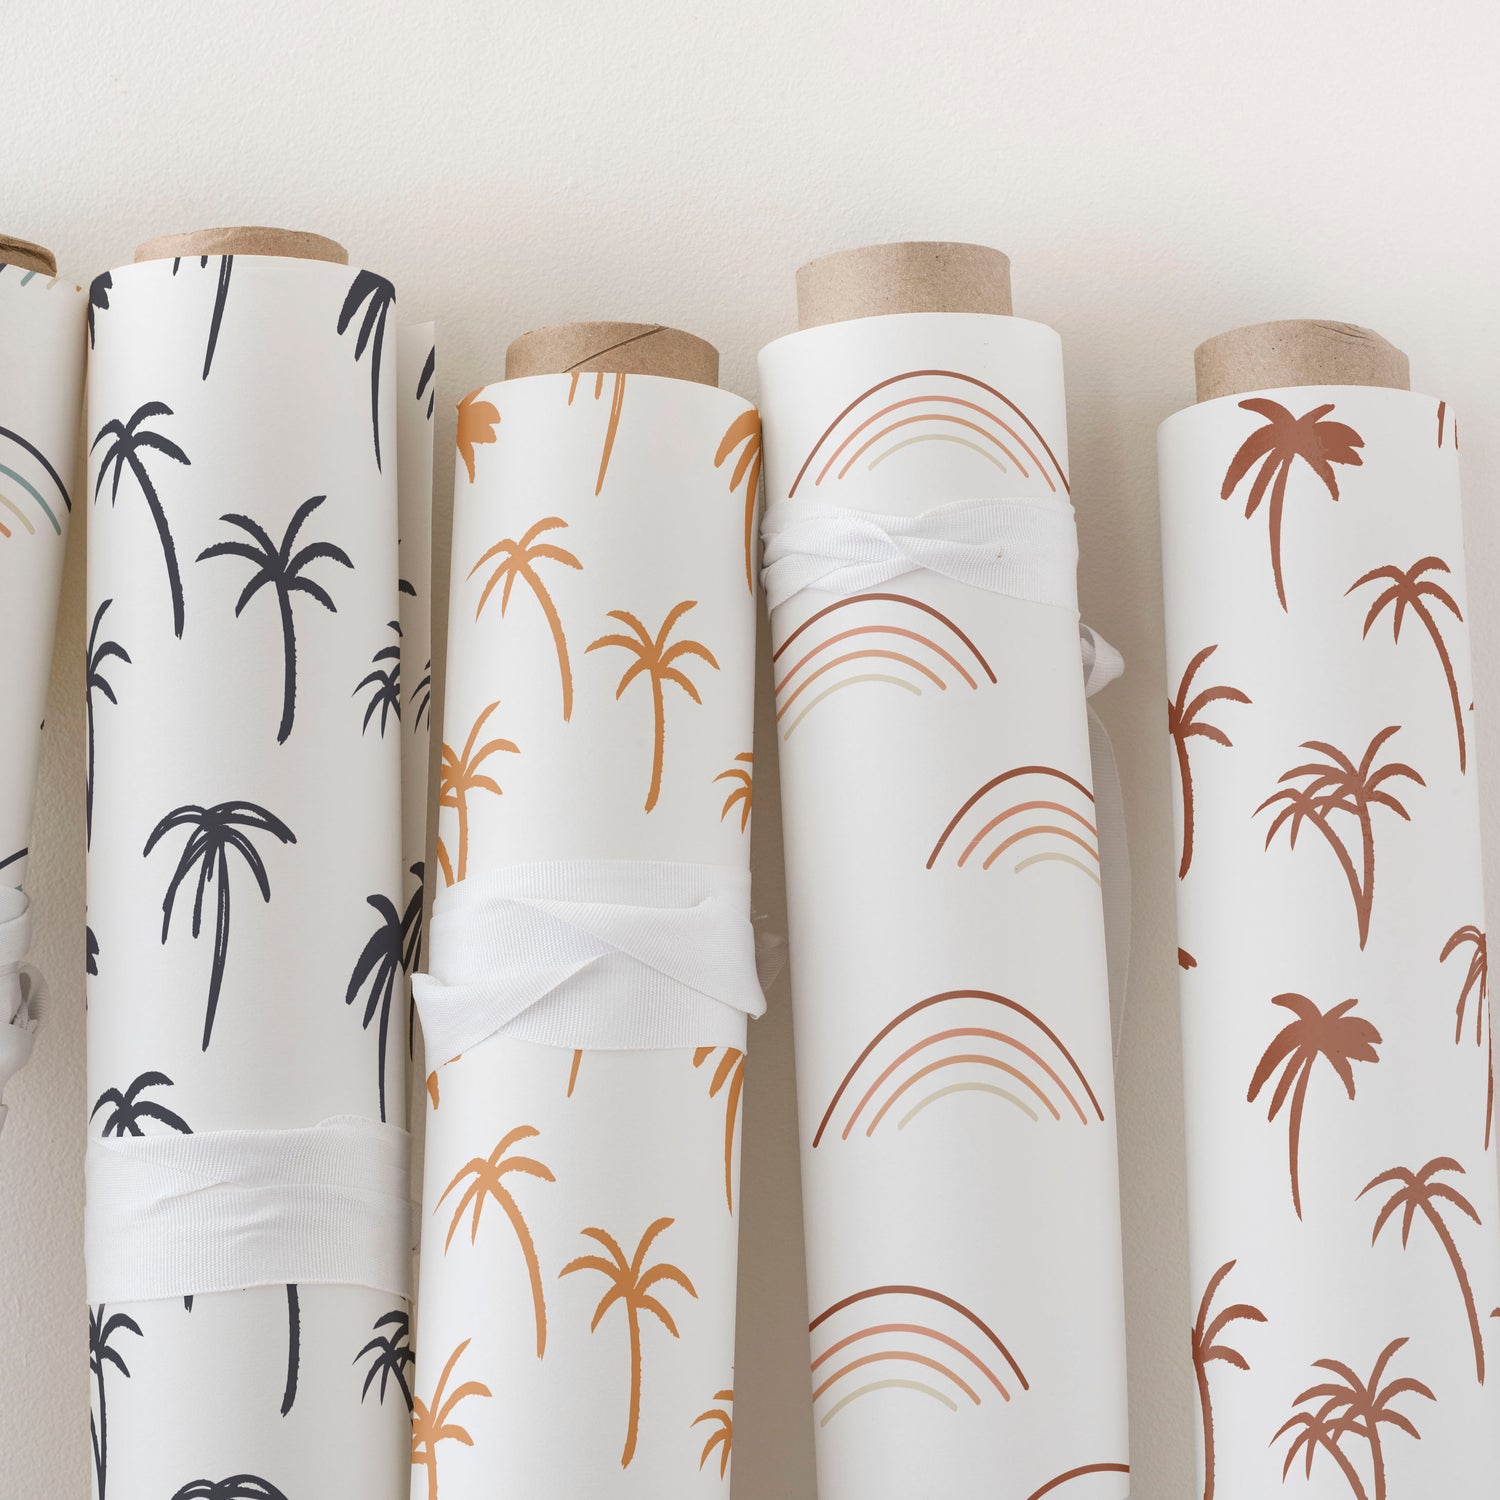 The Noa Tropical Palm Print Wallpaper Repeat Pattern | Rust - Munks and Me Wallpaper